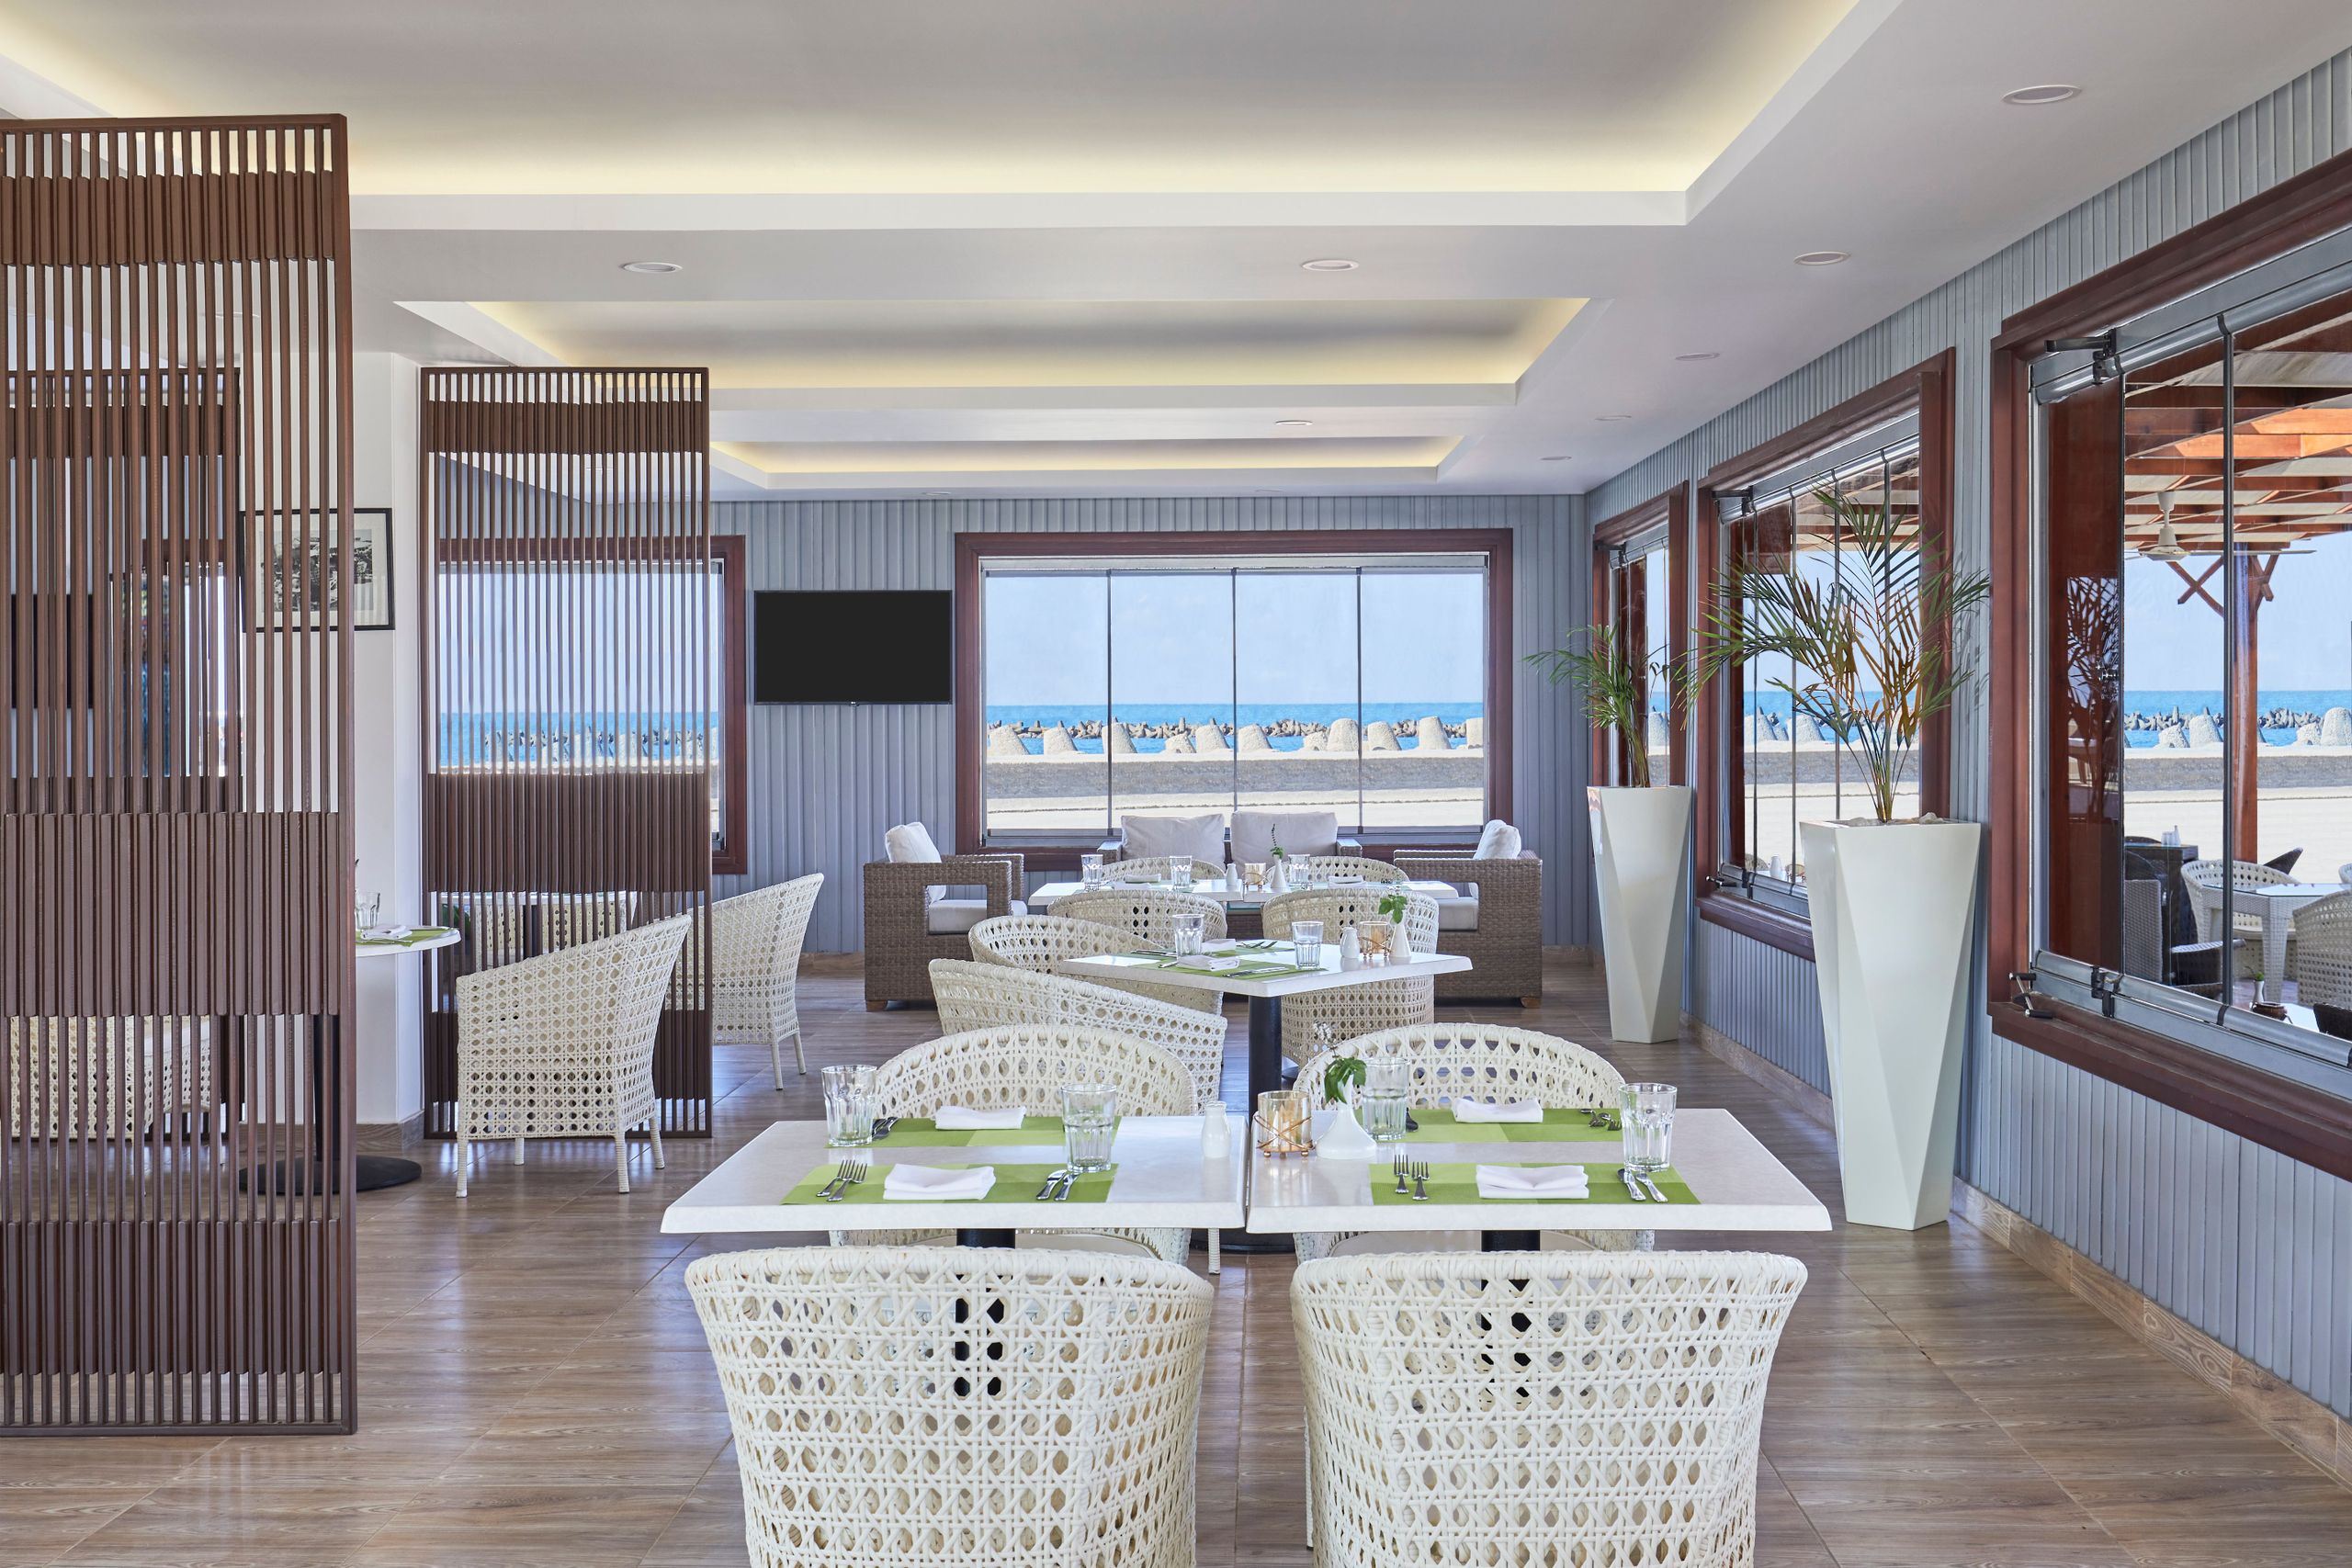 Steigenberger Hotel El Lessan - Ras El Bar - Egypt - Beach Restaurant